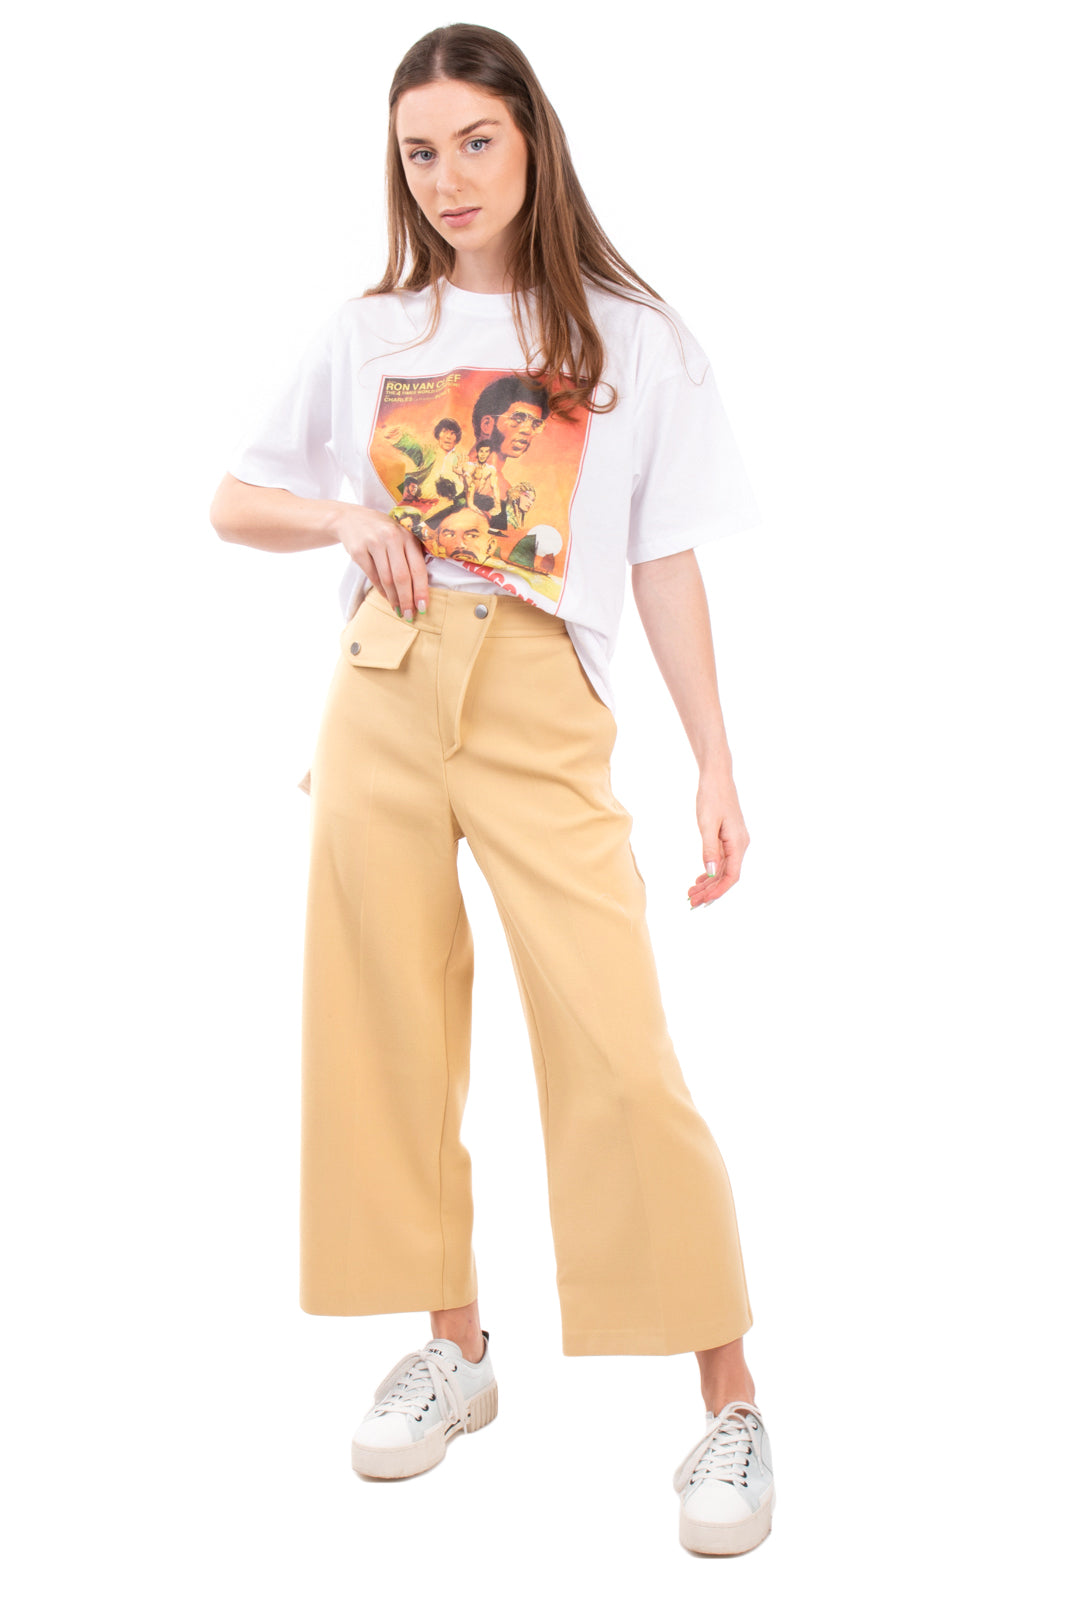 COS Pleated Trousers Size UK 6 Yellow Wool Blend High Waist Smart Dress  Summer | eBay